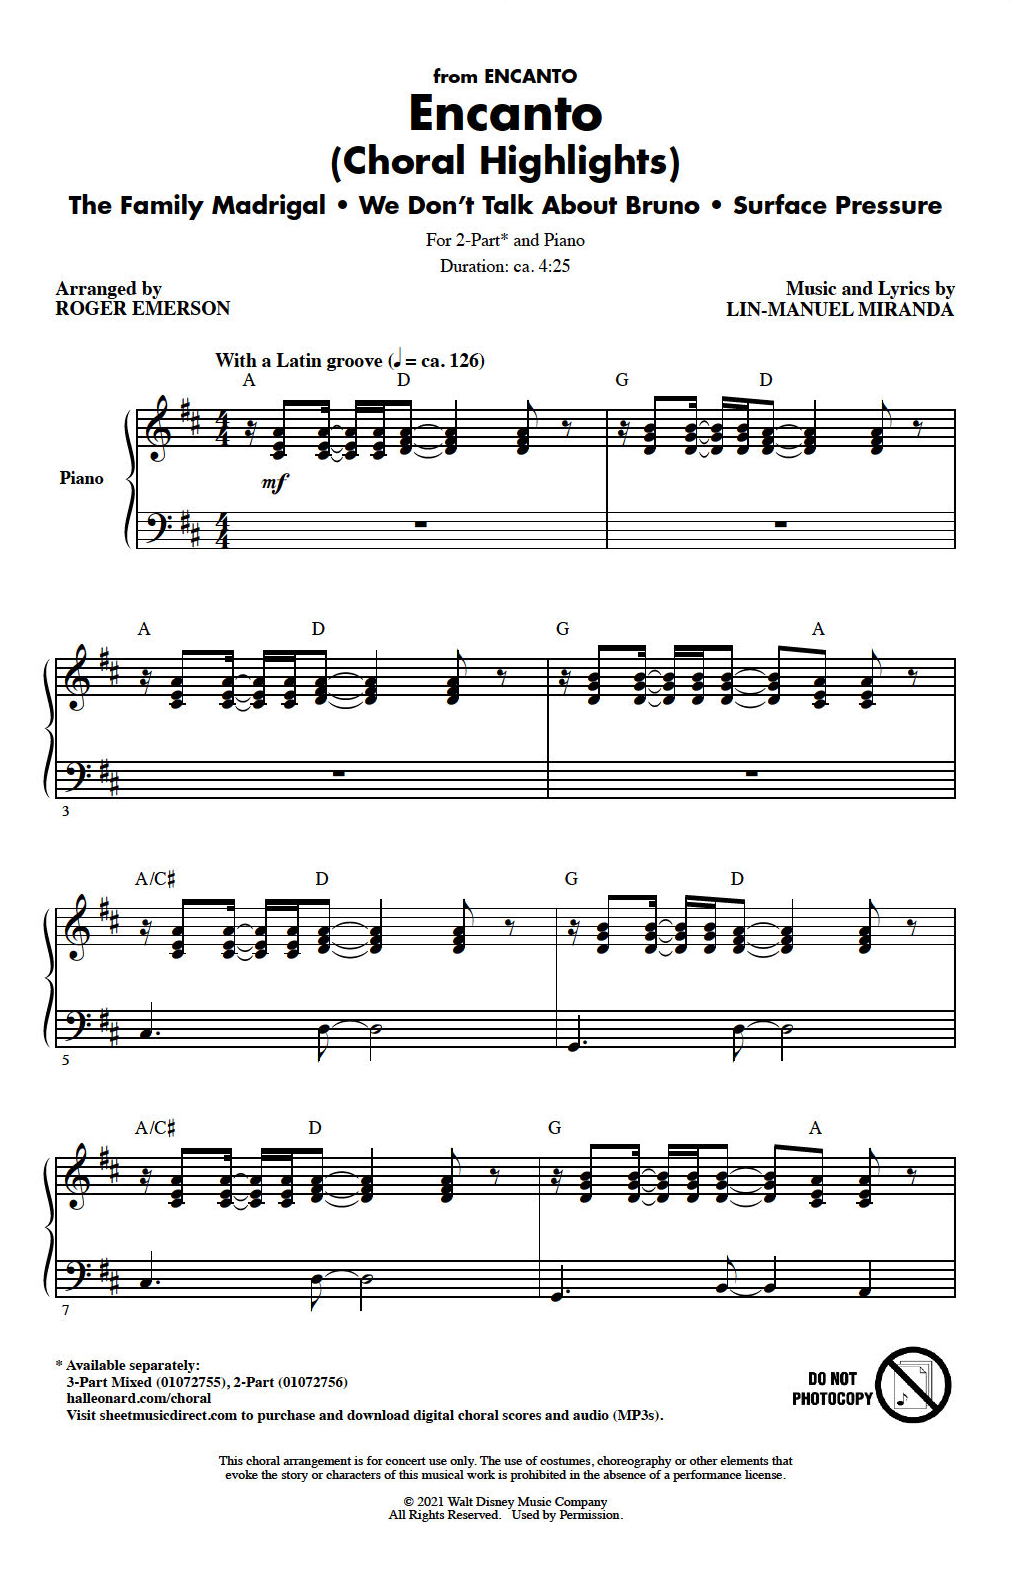 Lin-Manuel Miranda Encanto (Choral Highlights) (arr. Roger Emerson) Sheet Music Notes & Chords for 2-Part Choir - Download or Print PDF